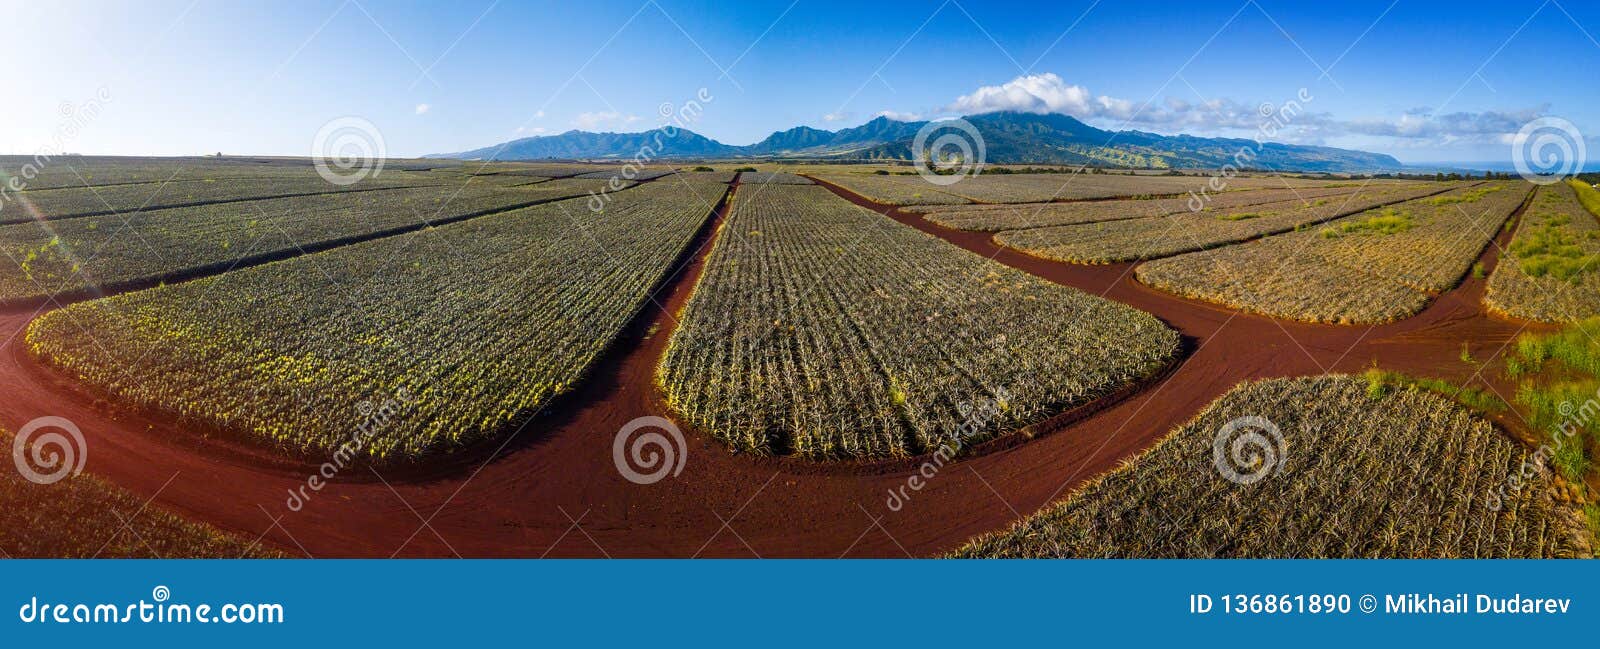 panorama of the pinapple plantation